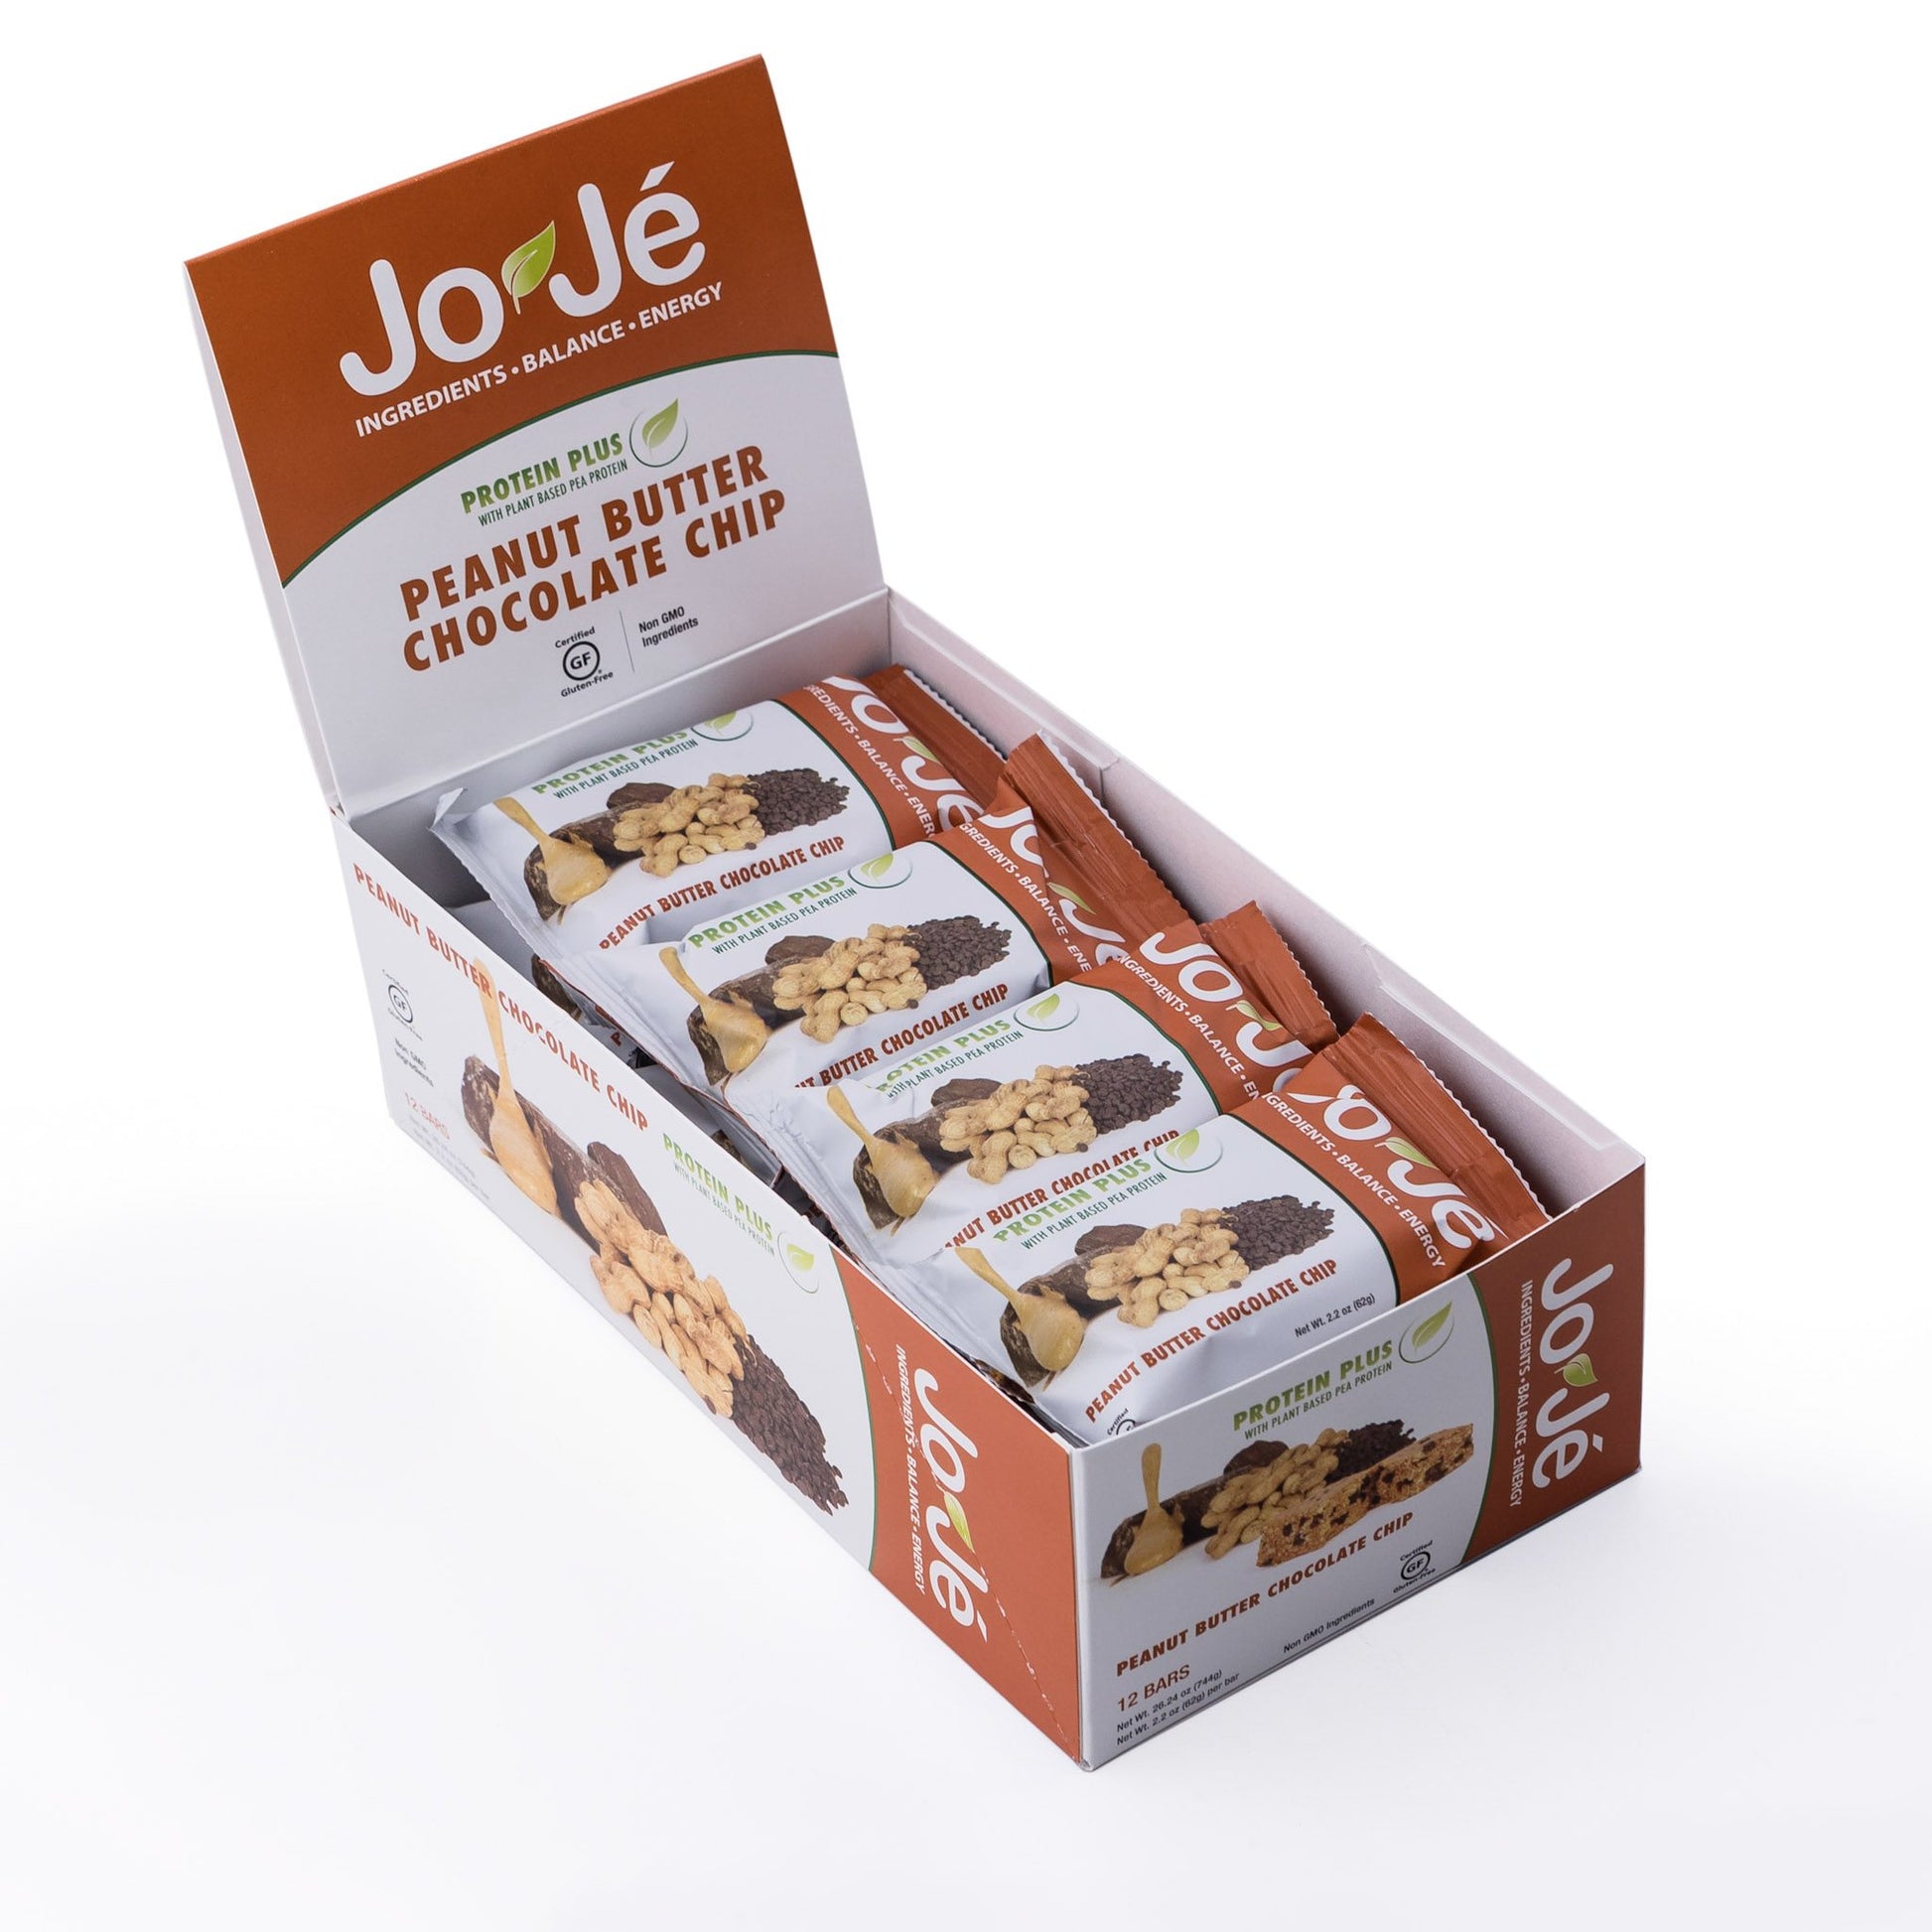 JoJé Peanut Butter Chocolate Chip Bar display box of 12